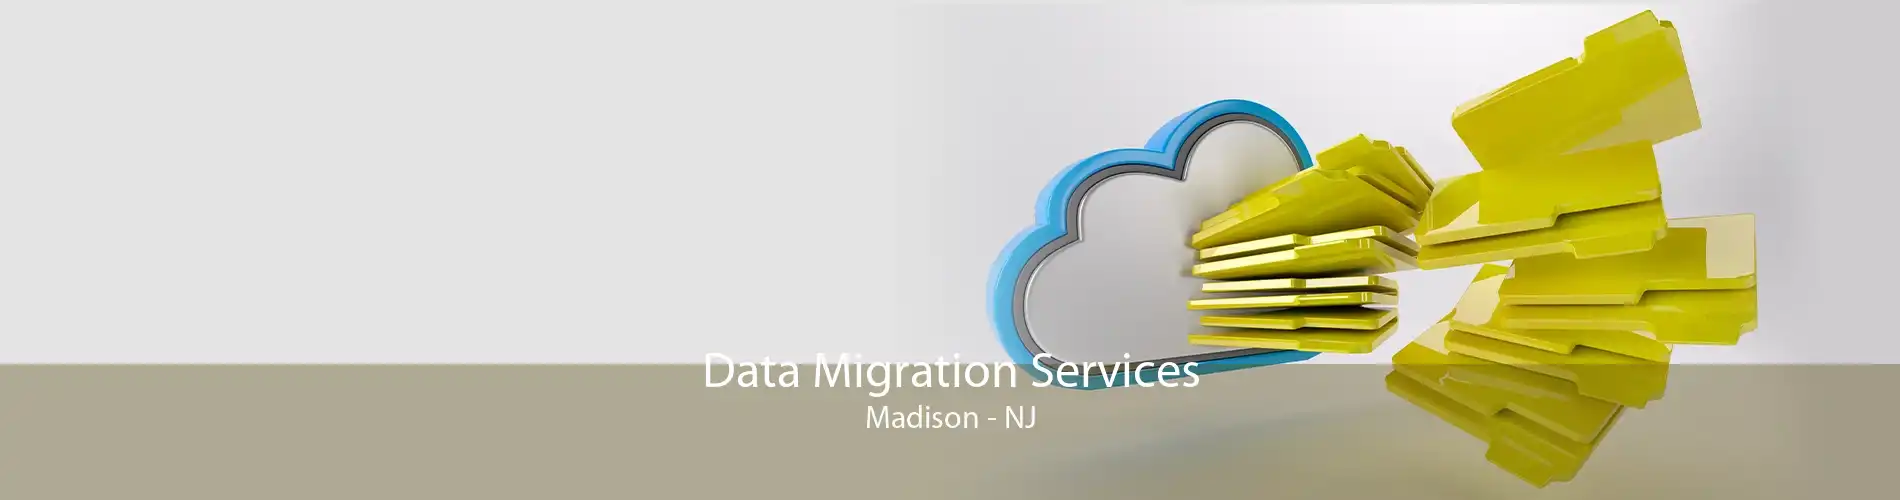 Data Migration Services Madison - NJ